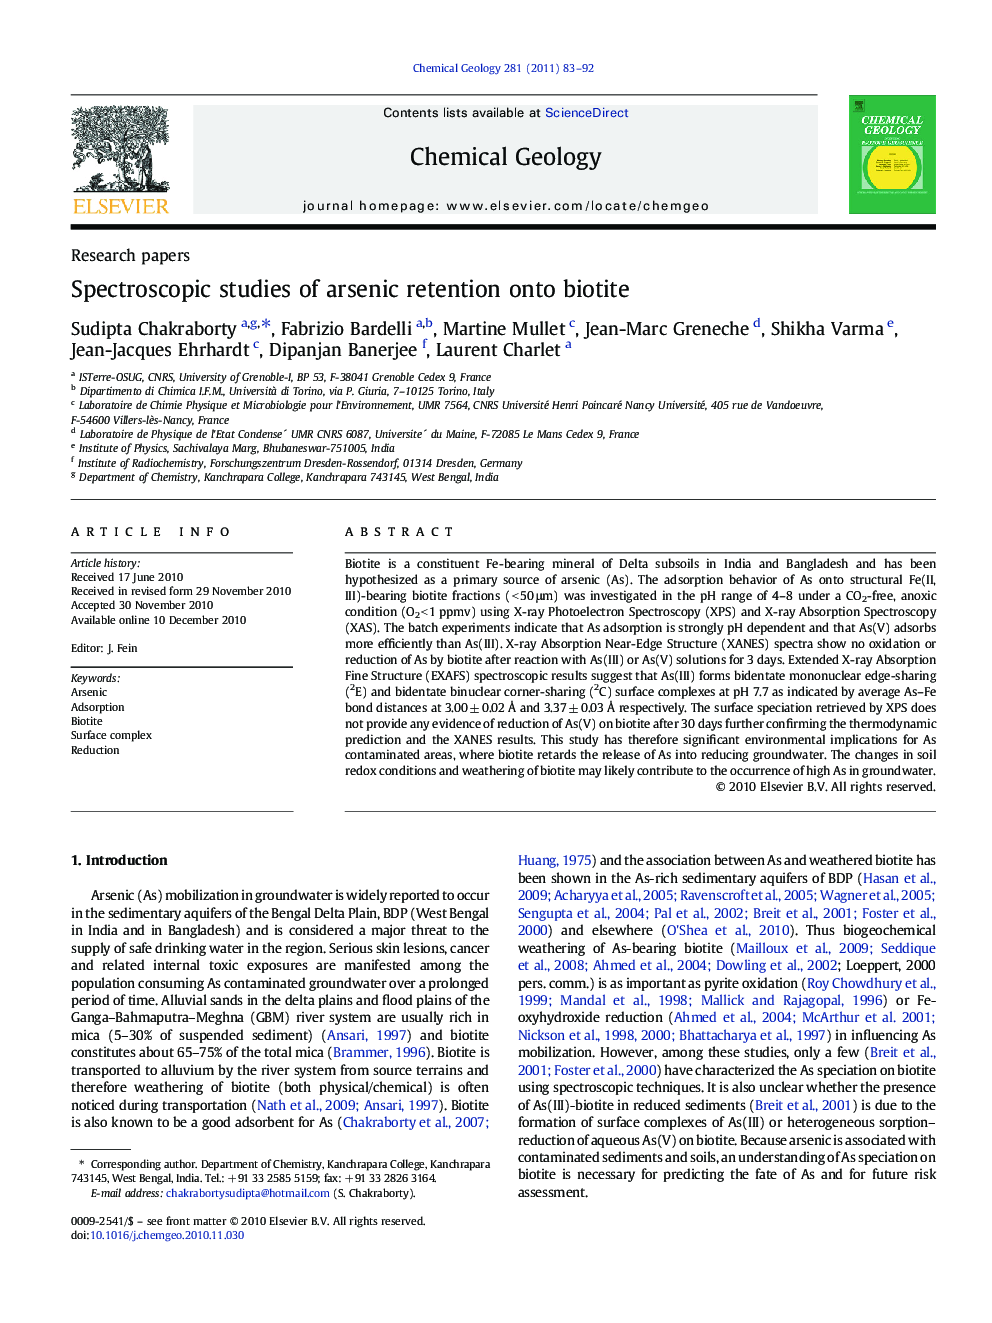 Research papersSpectroscopic studies of arsenic retention onto biotite